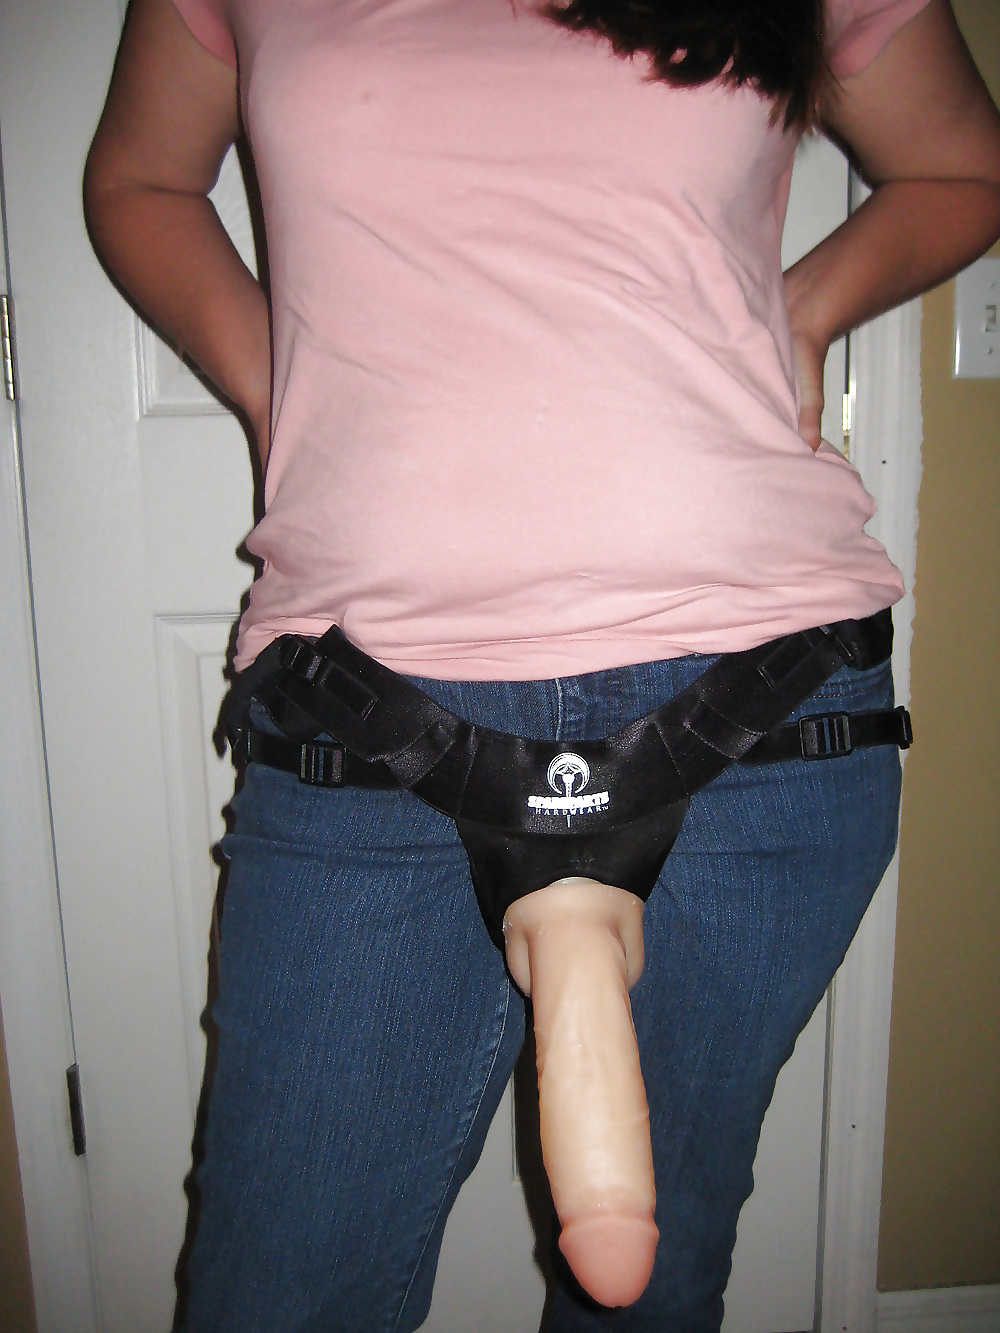 Strapon sluts in jeans that make bi Strap on wife cum #30615207